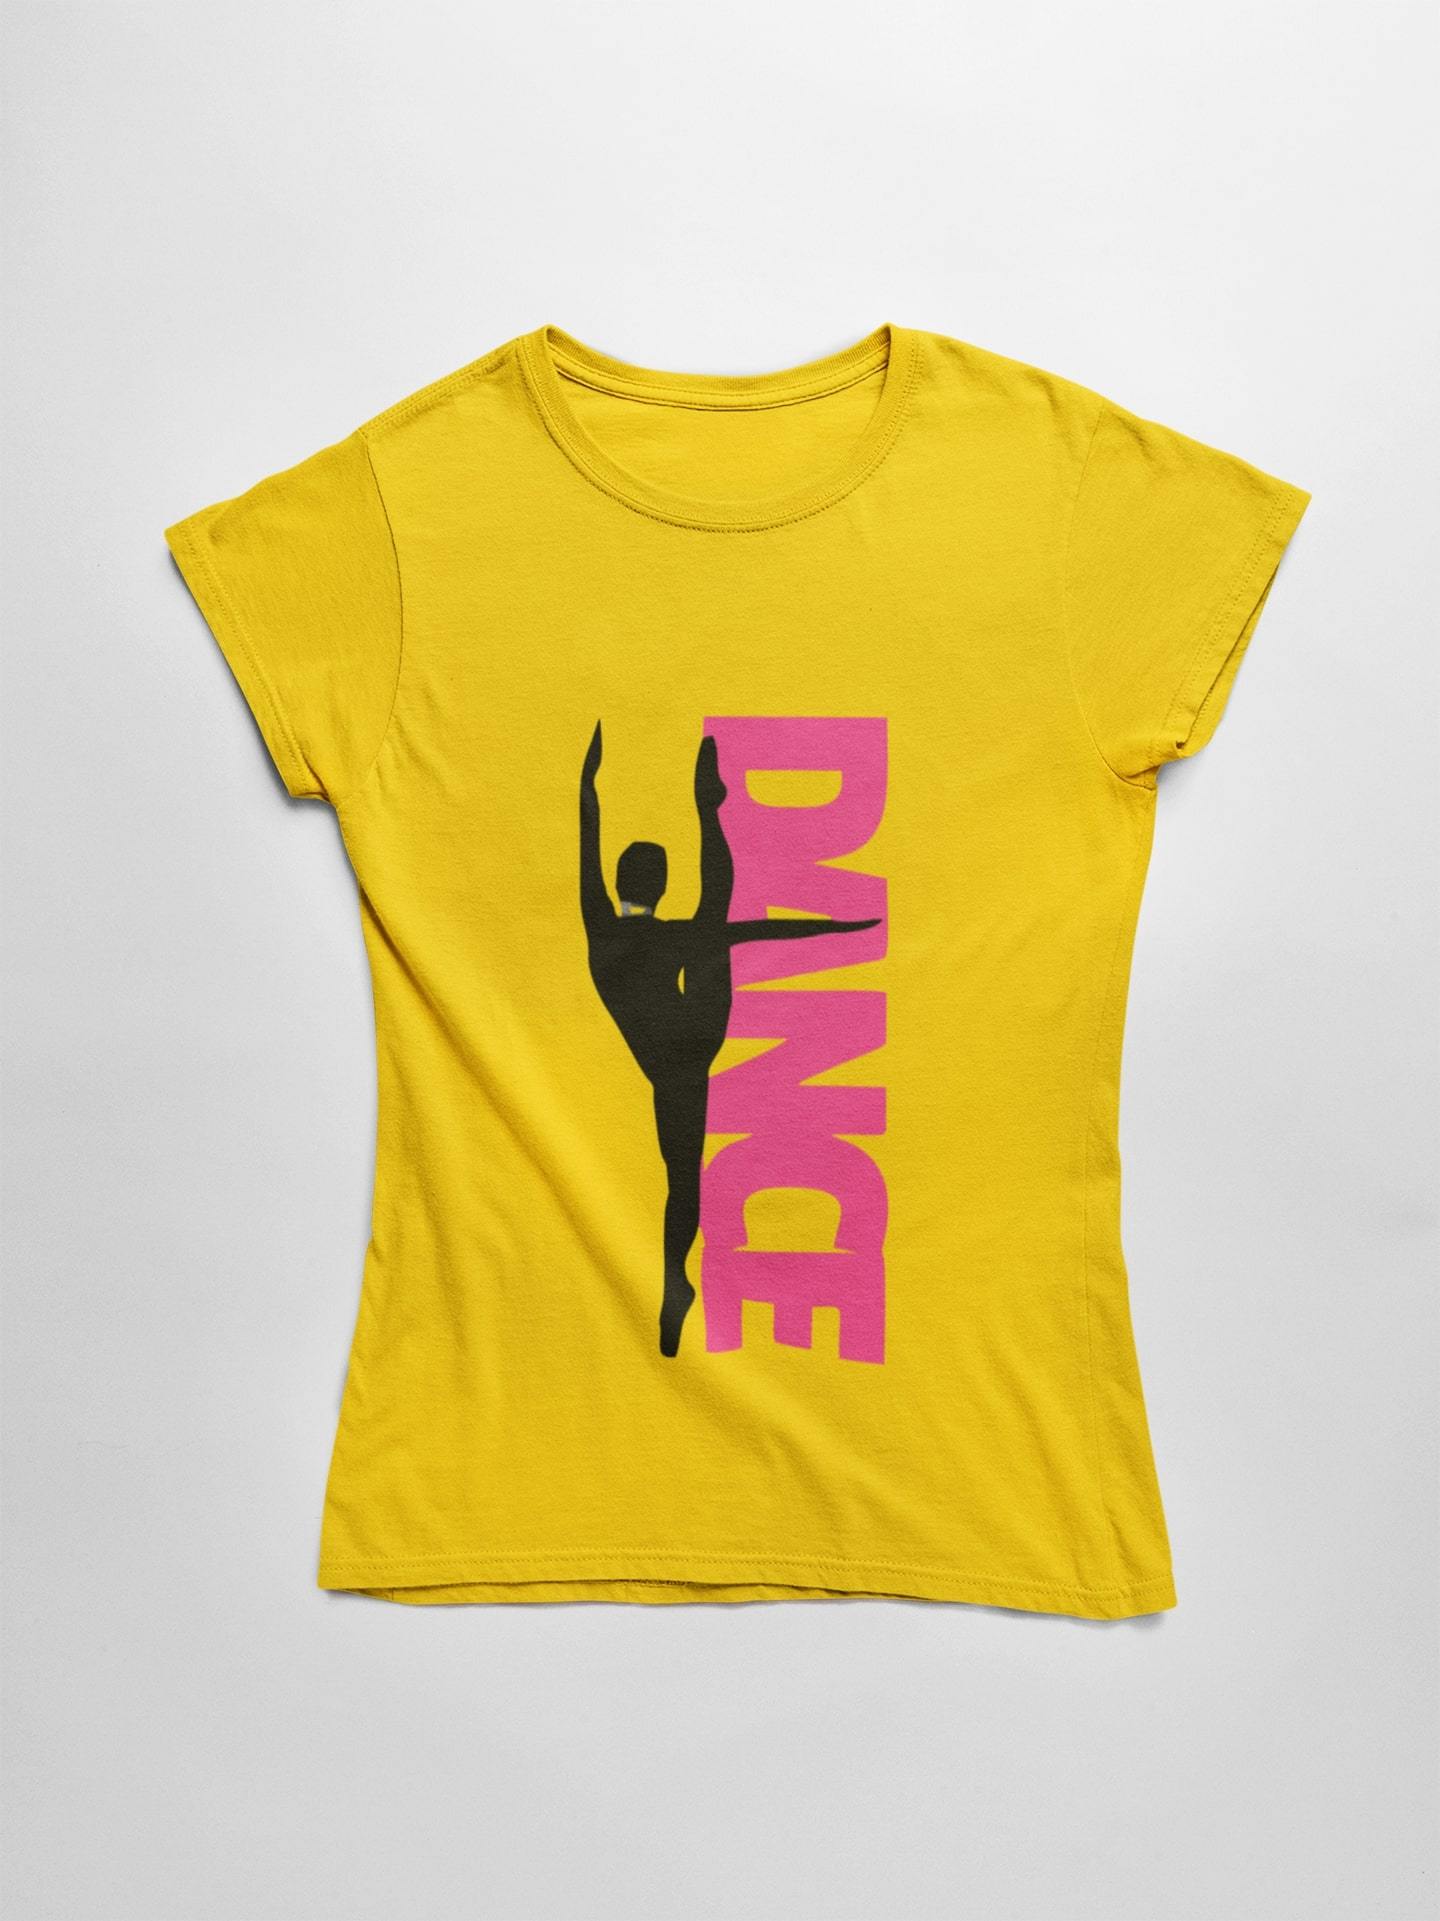 thelegalgang,Contemporary Dance Inspired T shirt for Women,WOMEN.